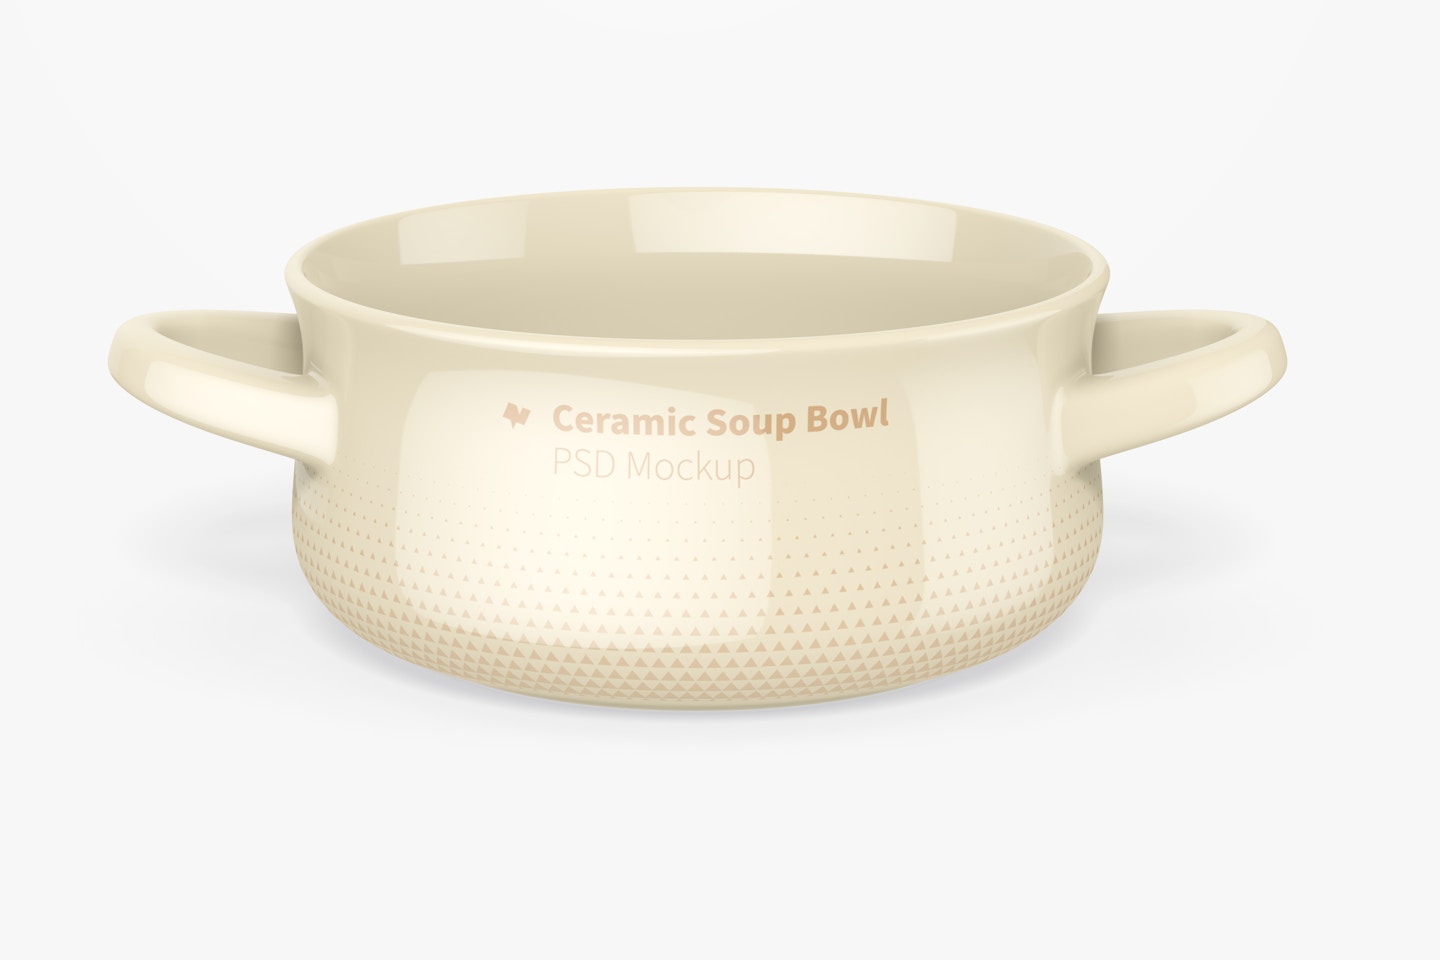 Ceramic Soup Bowl with Handles Mockup